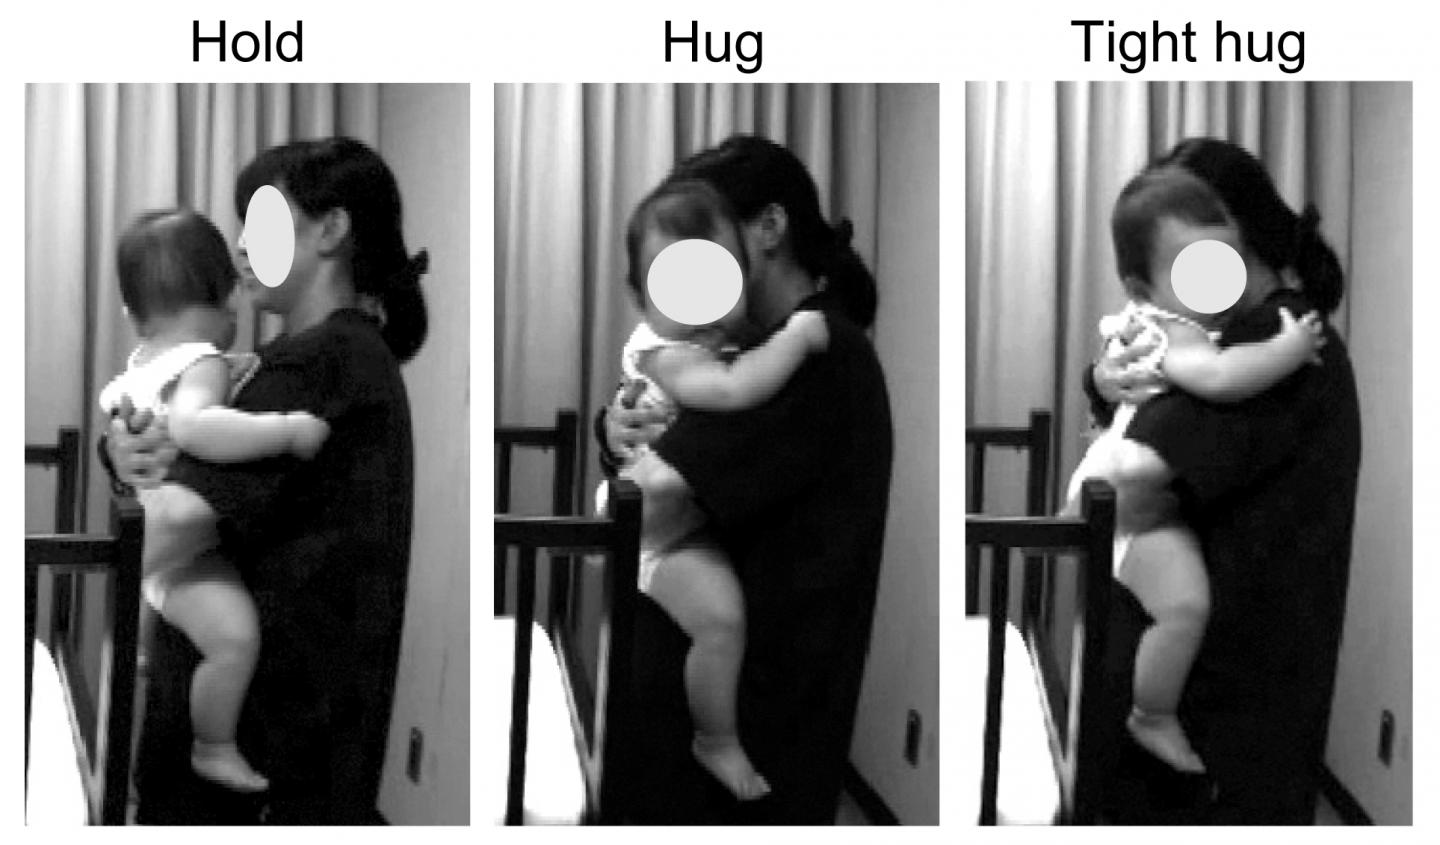 Hold/Hug Task